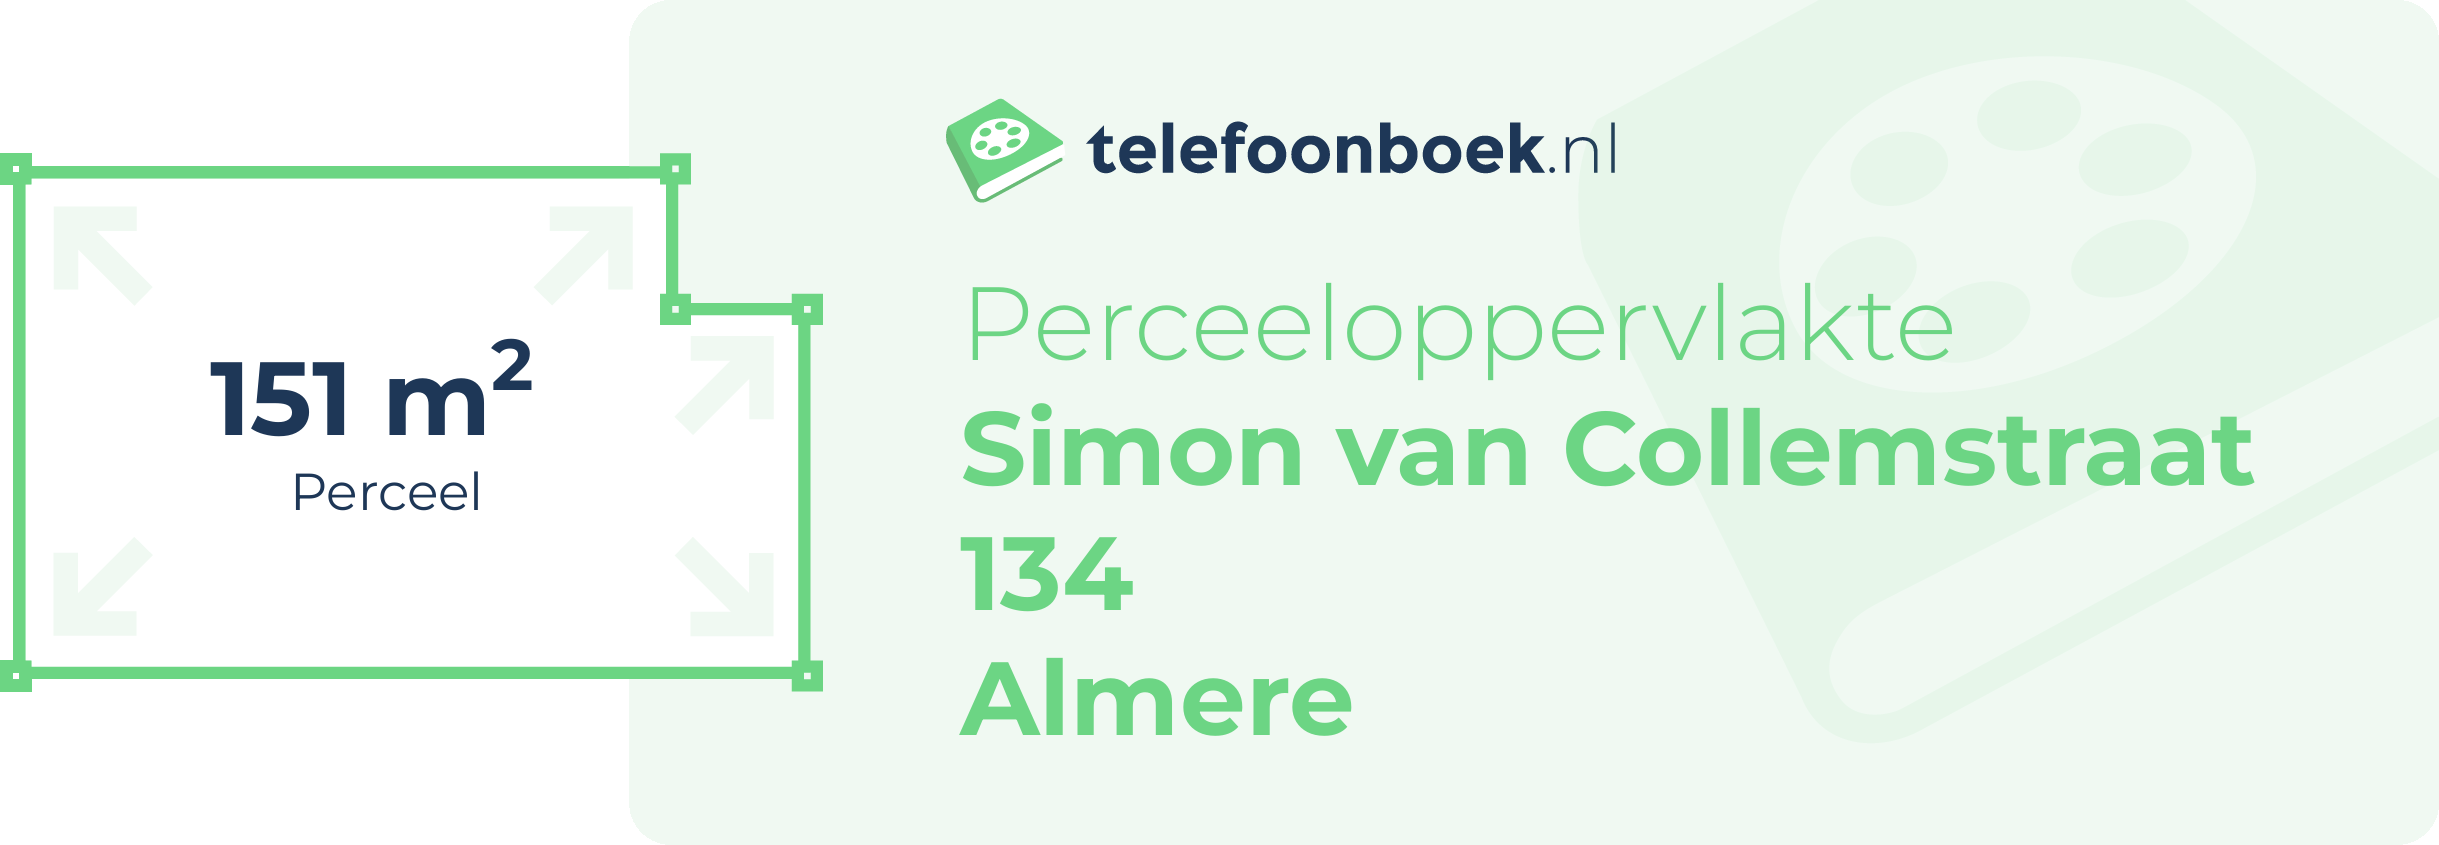 Perceeloppervlakte Simon Van Collemstraat 134 Almere